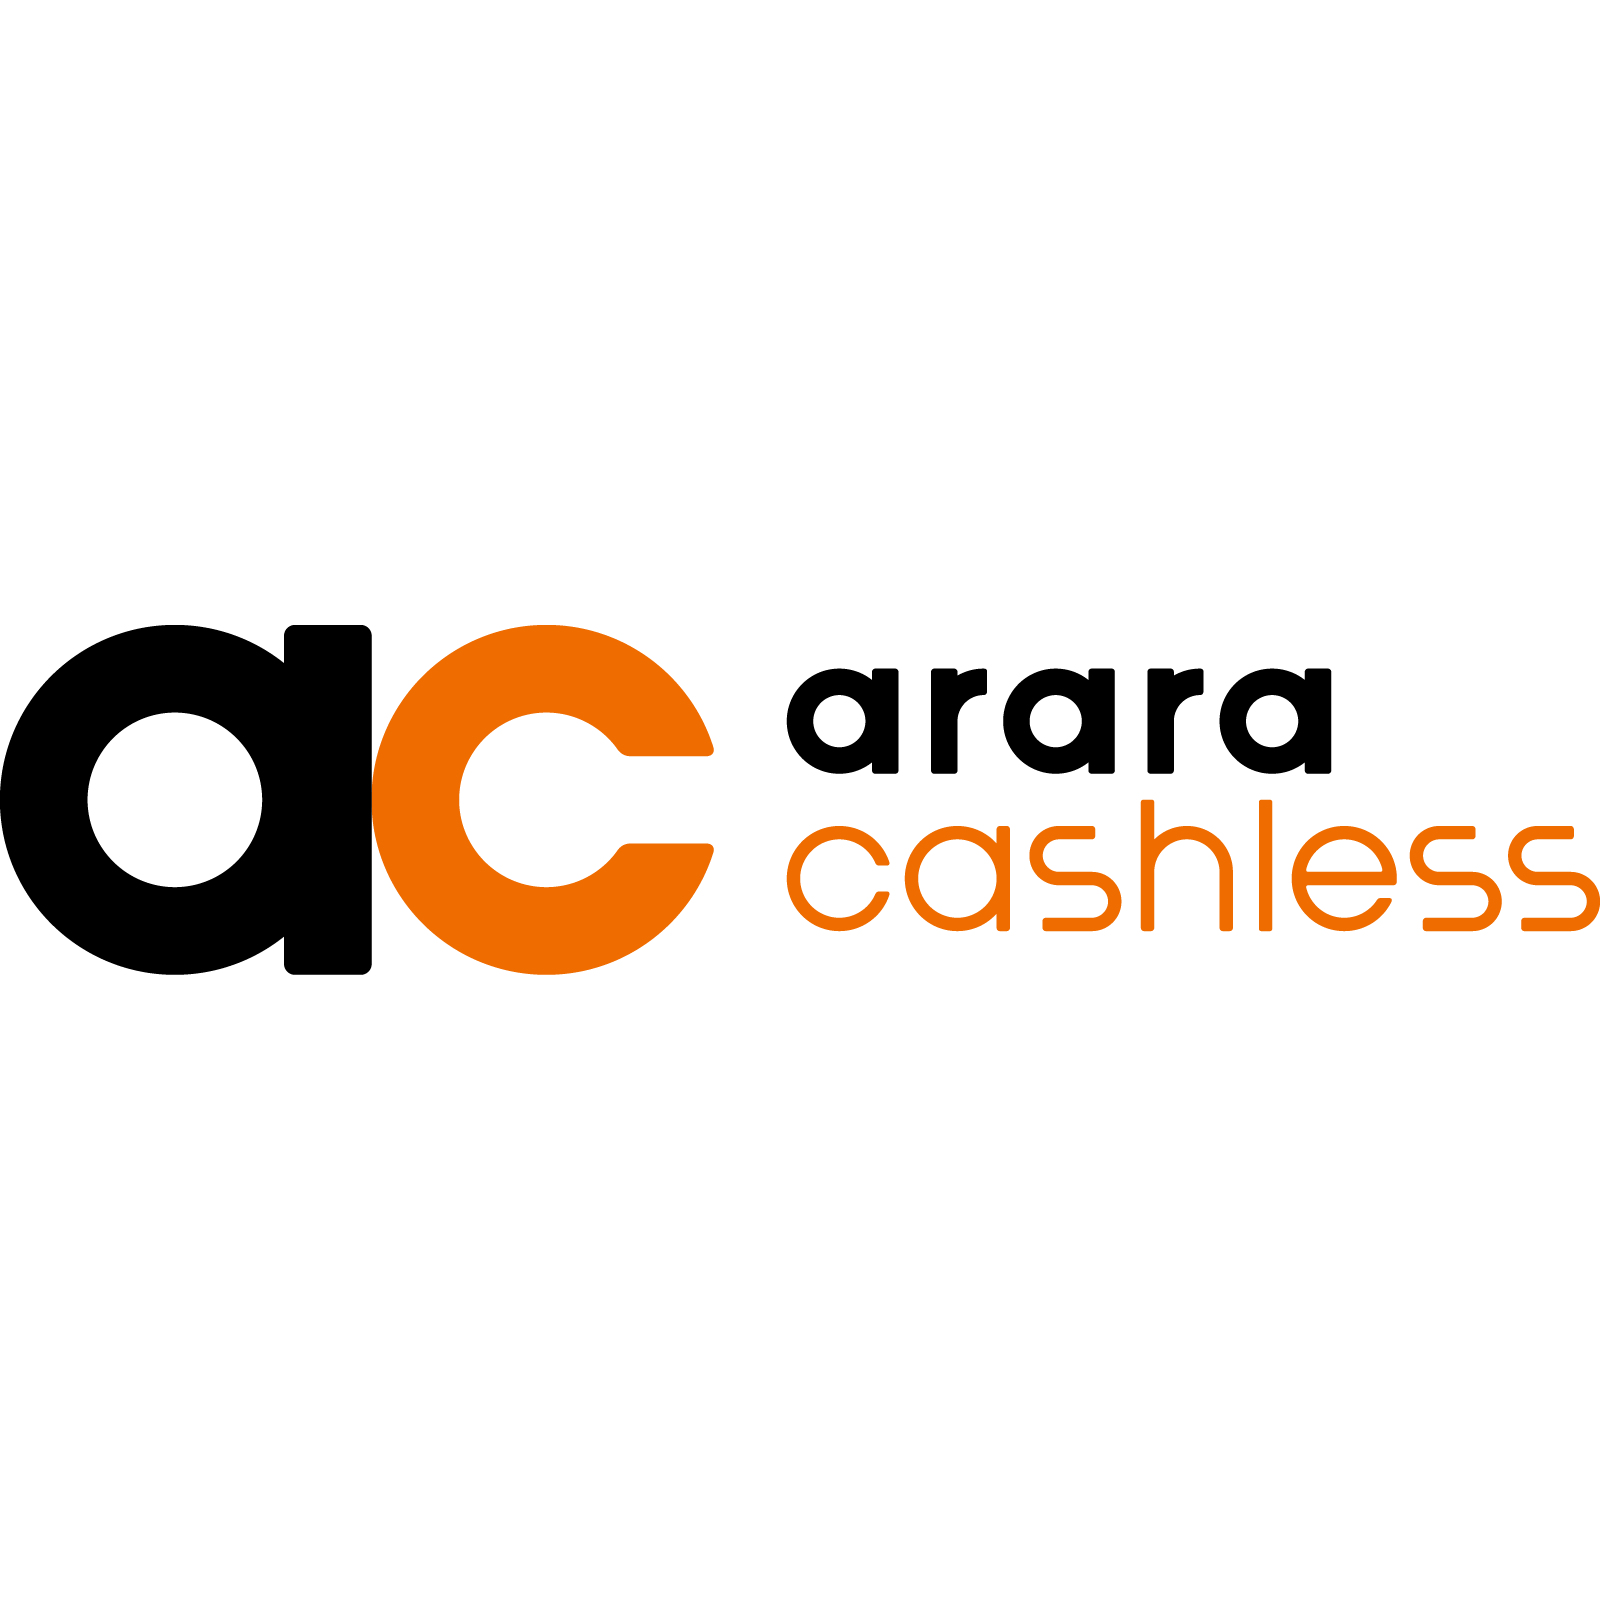 arara cashless